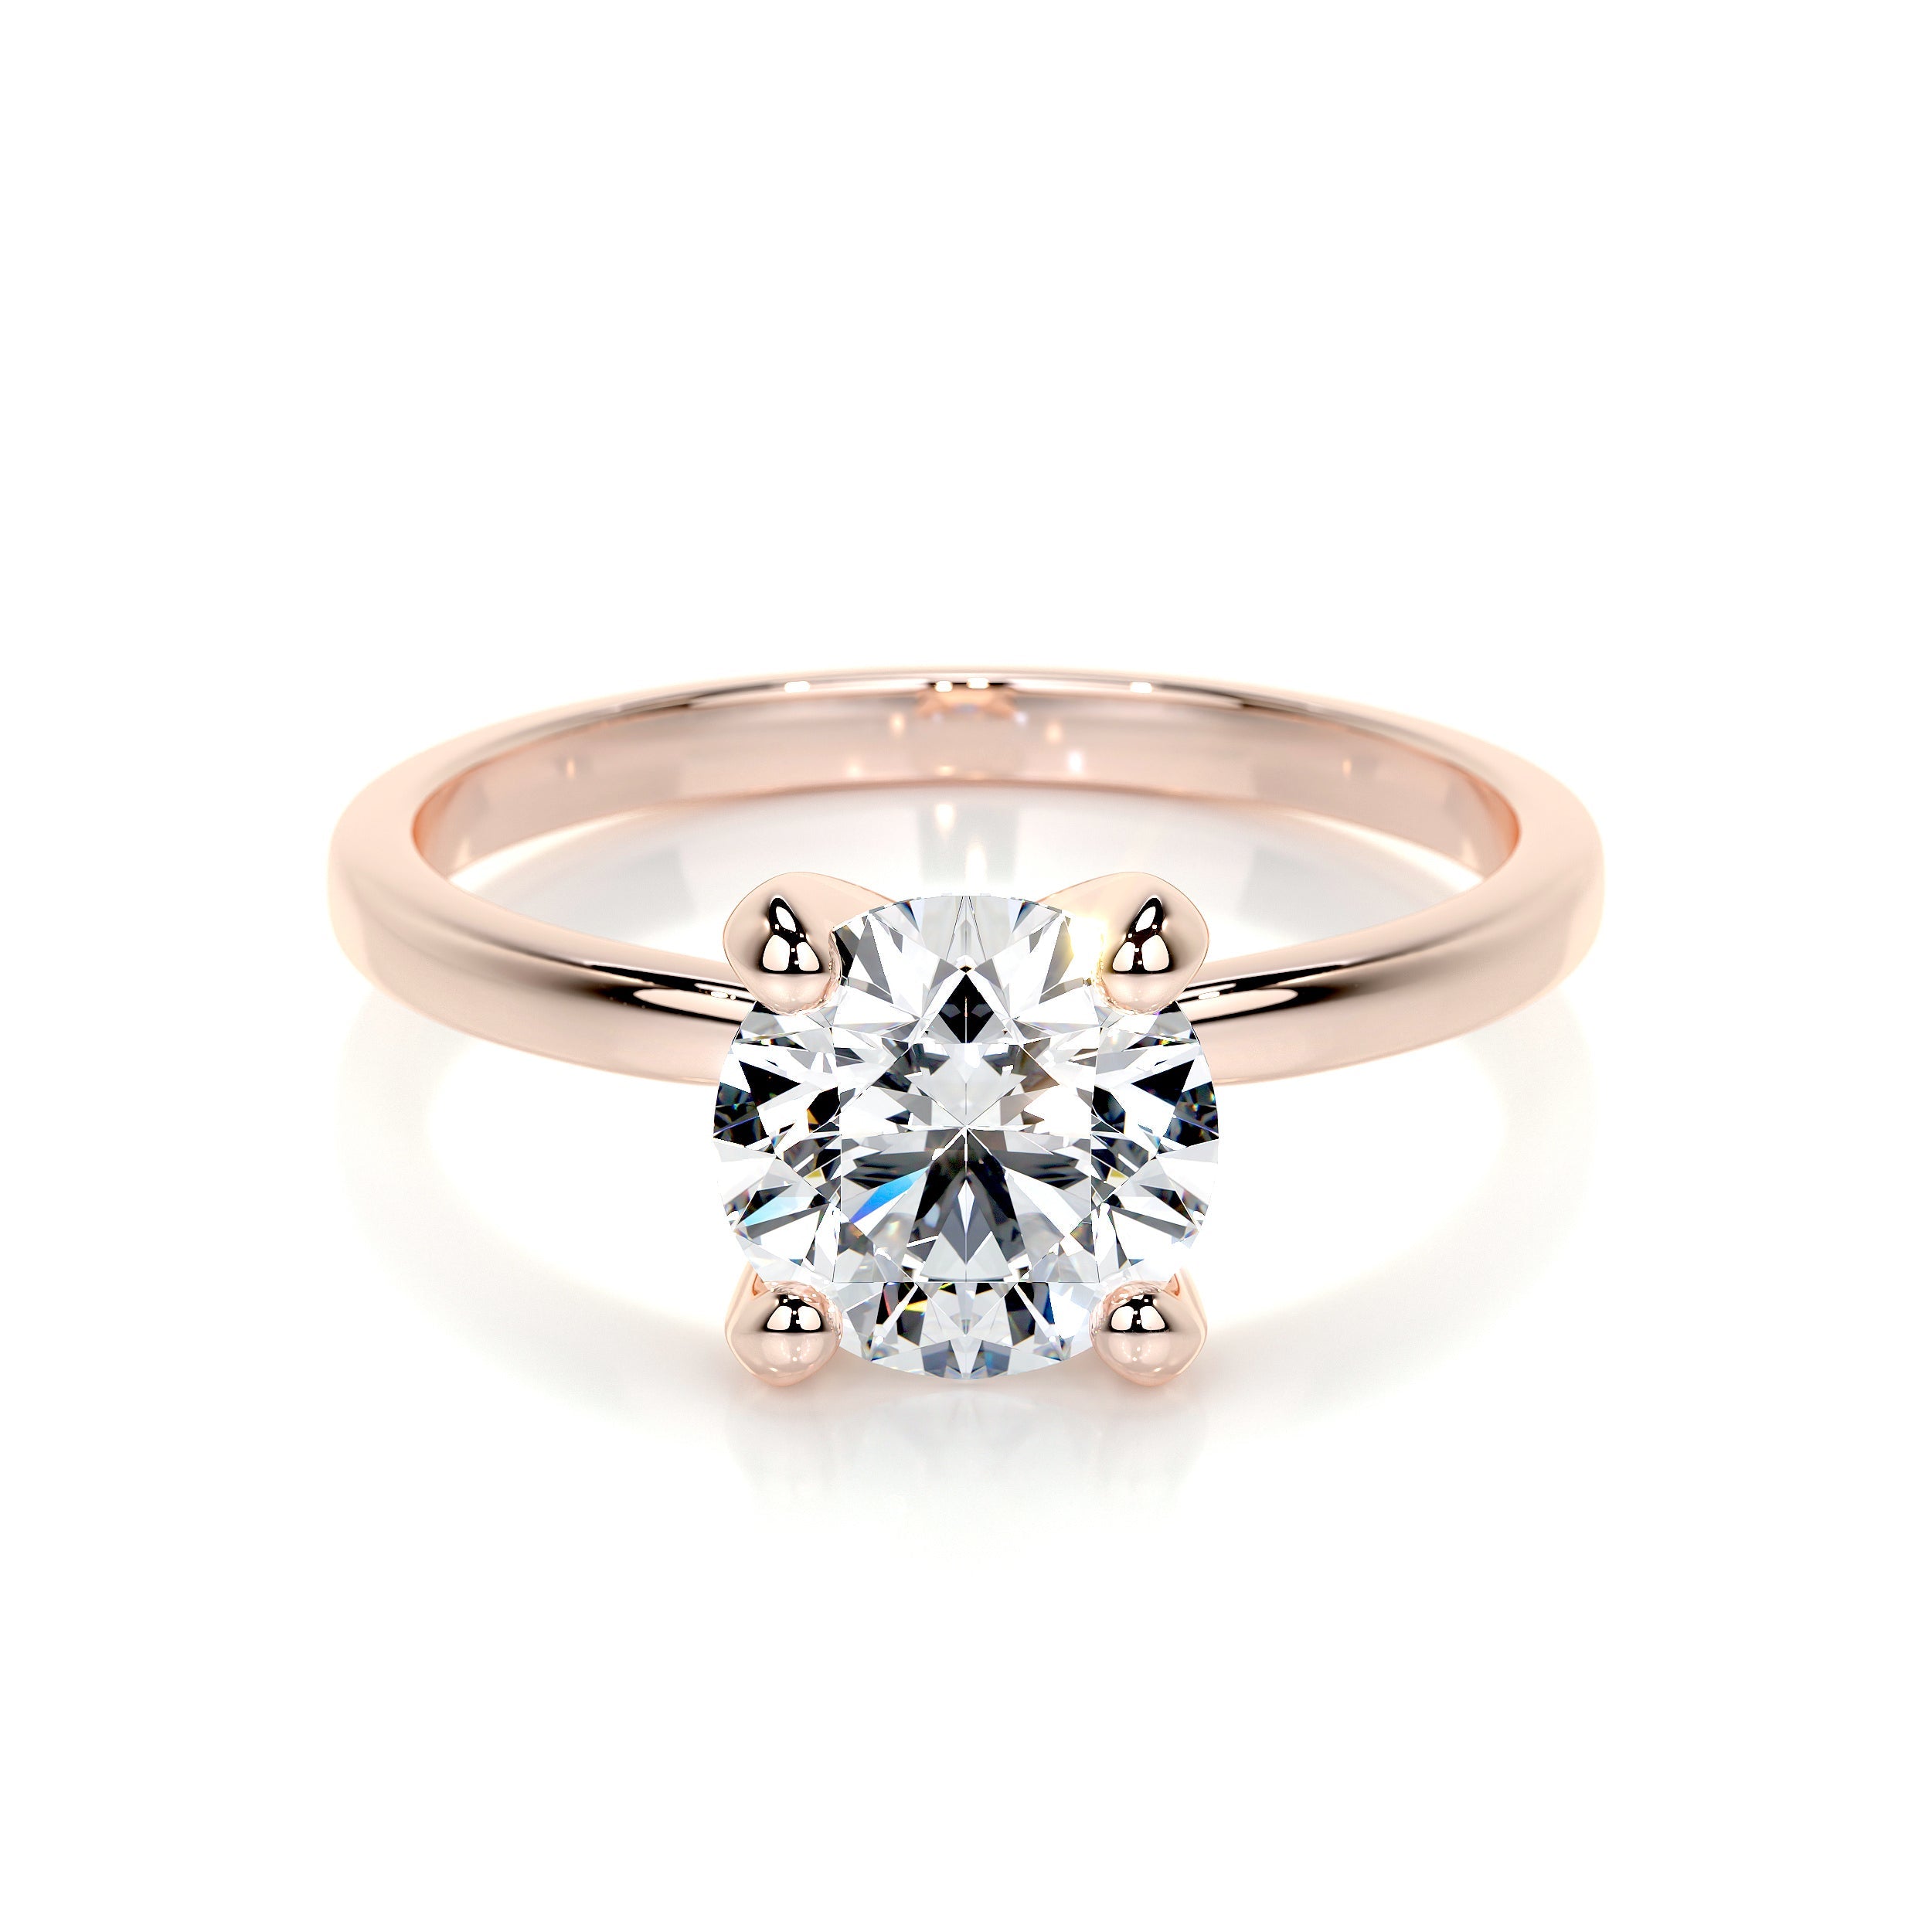 Jessica Lab Grown Diamond Ring   (1.5 Carat) -14K Rose Gold